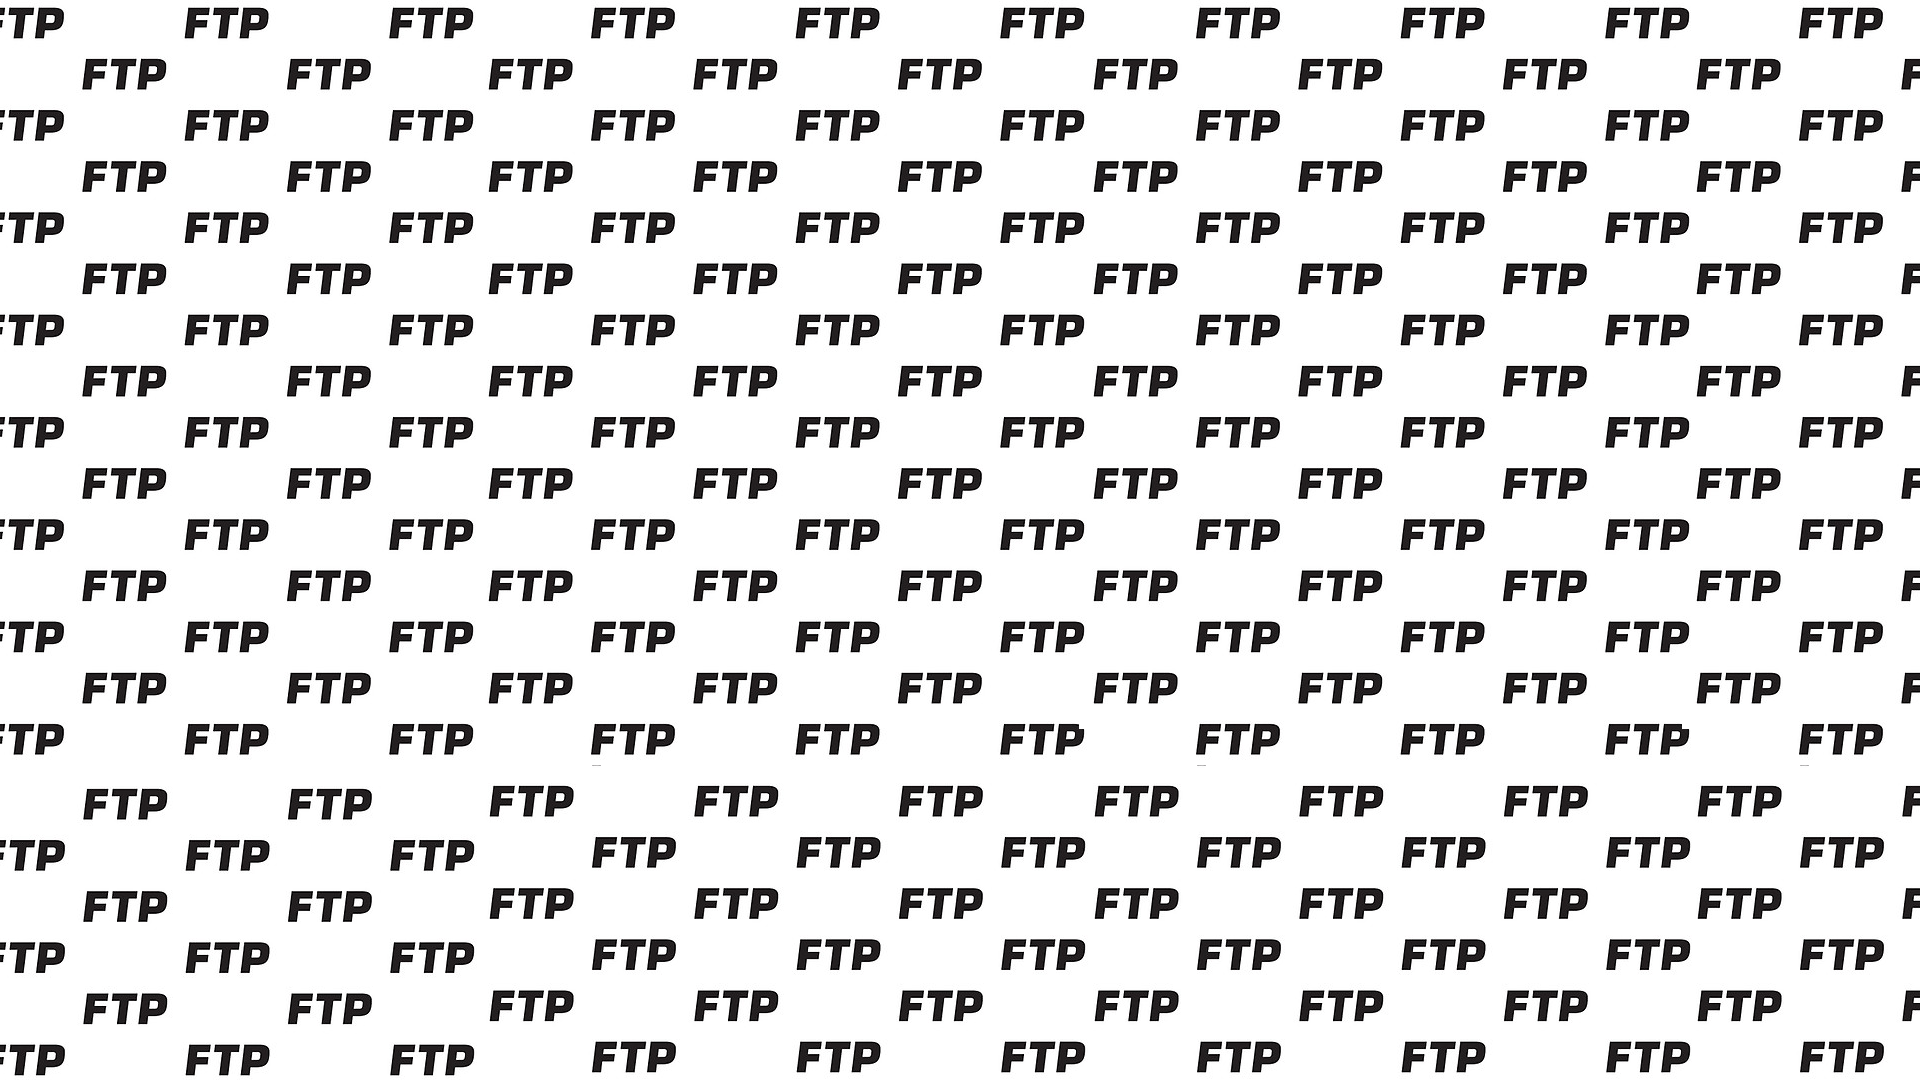 FTP wallpaper by umutcanarslan  Download on ZEDGE  5cdf